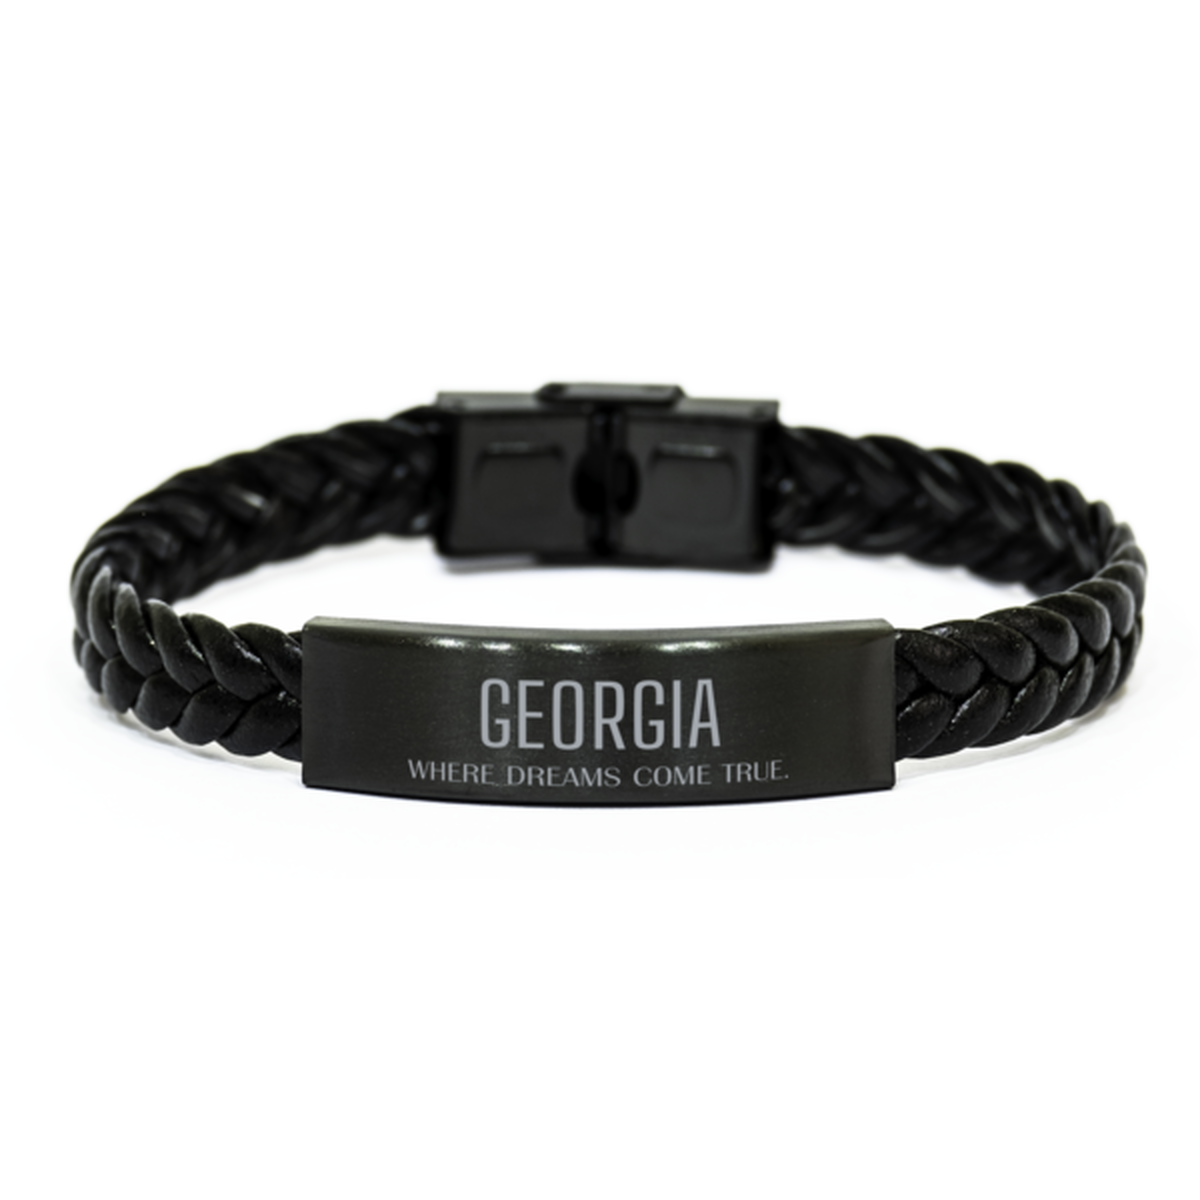 Love Georgia State Braided Leather Bracelet, Georgia Where dreams come true, Birthday Inspirational Gifts For Georgia Men, Women, Friends